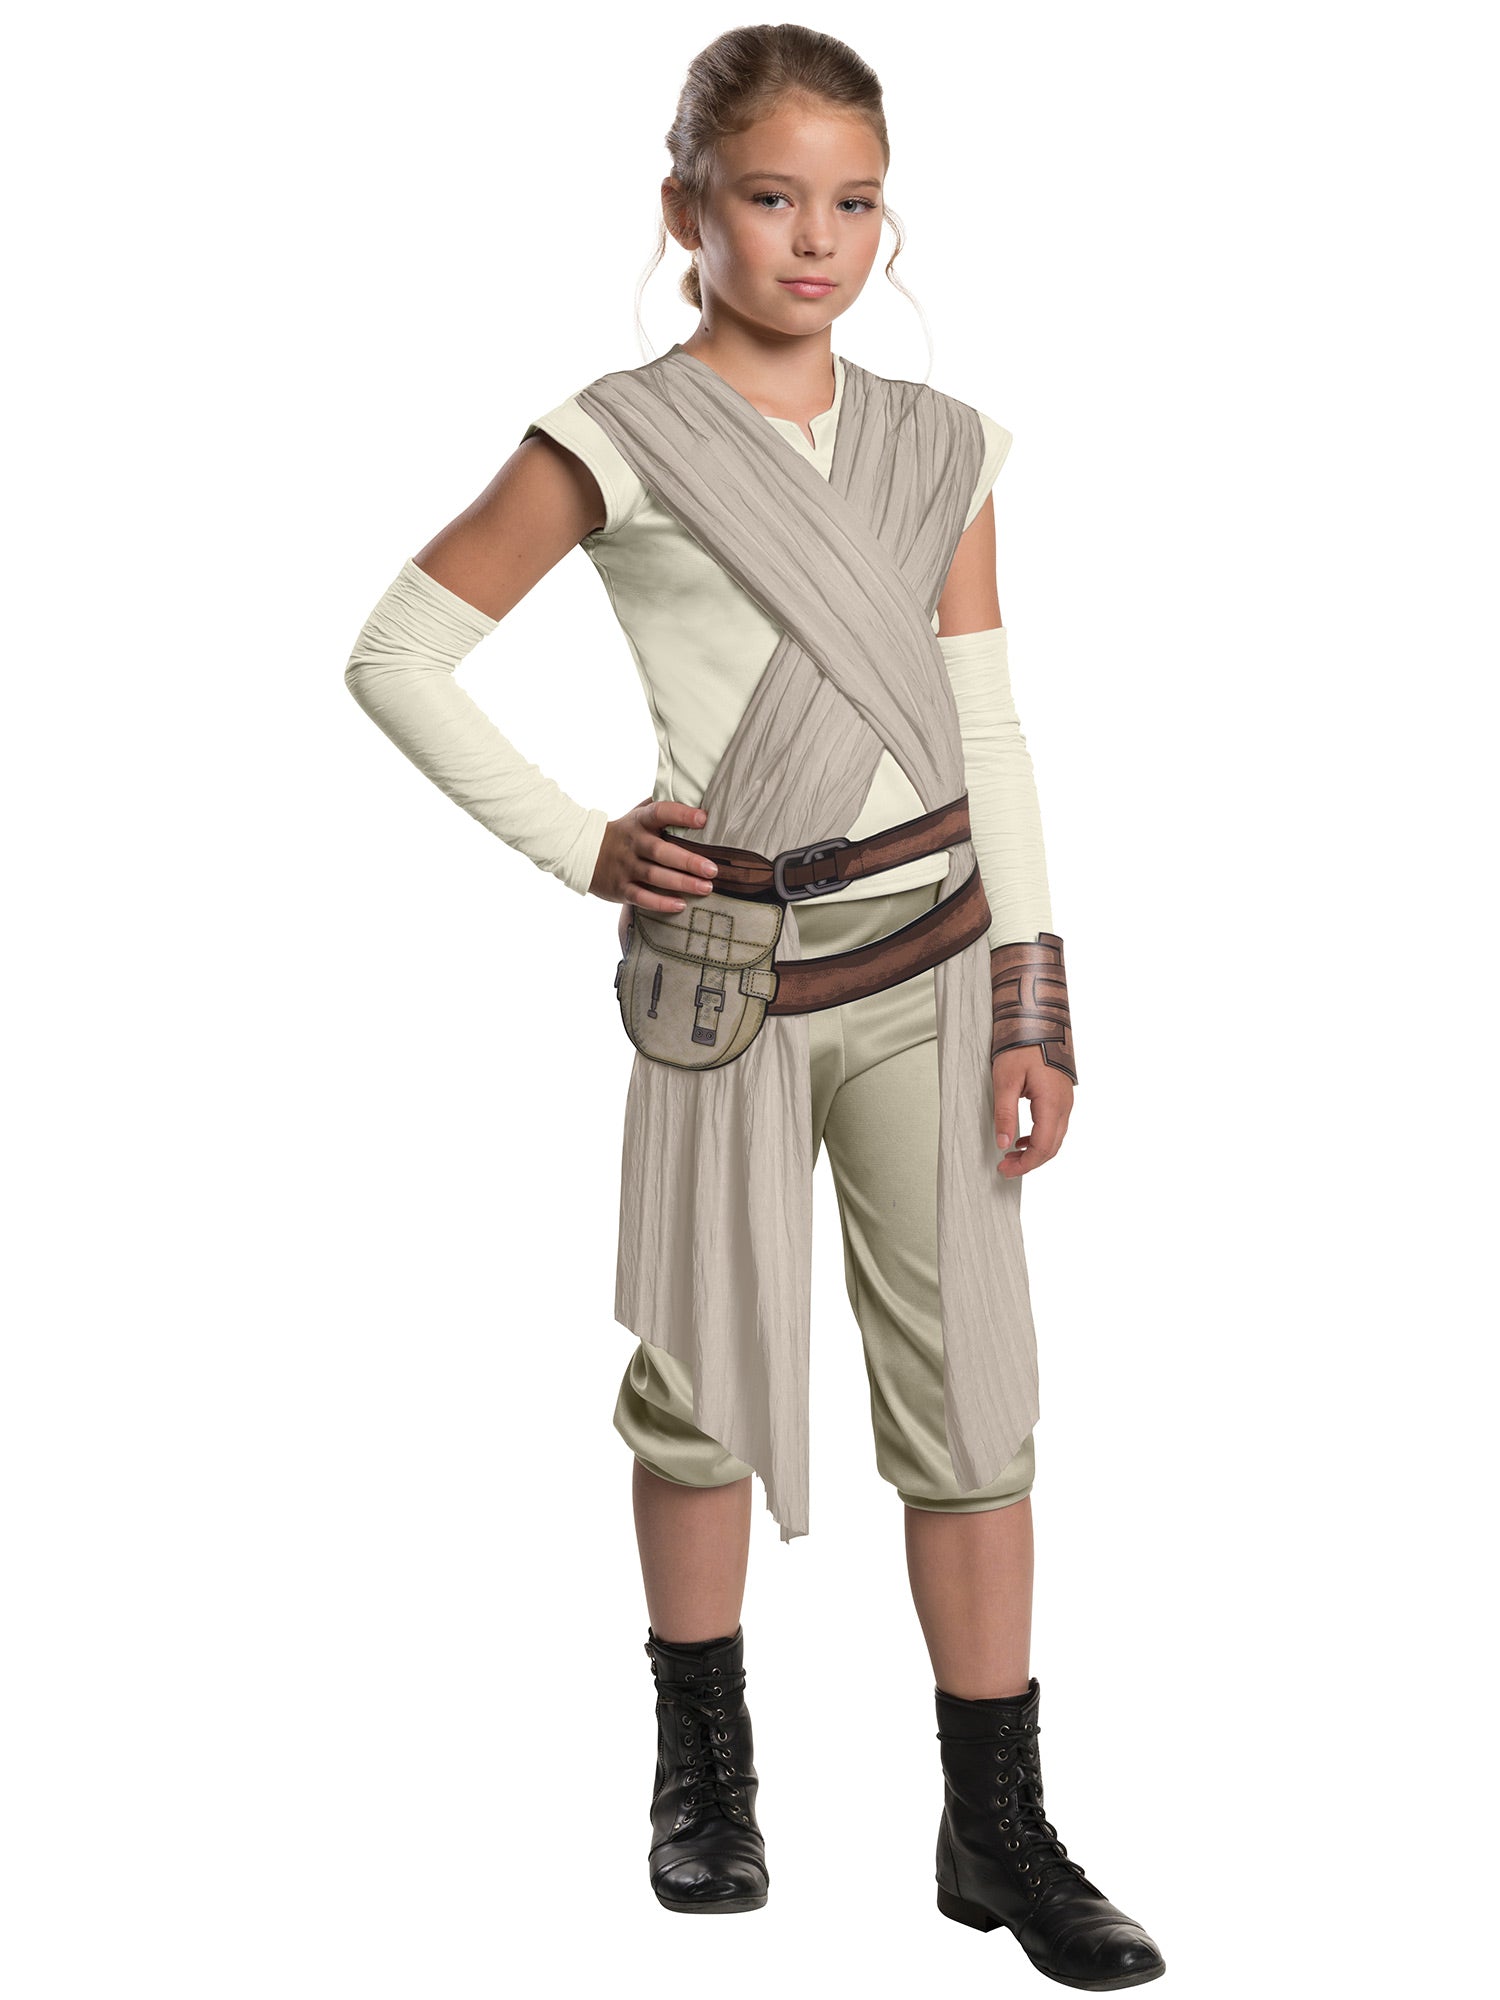 Star Wars Episode VII Rey Child Costume - costumes.com